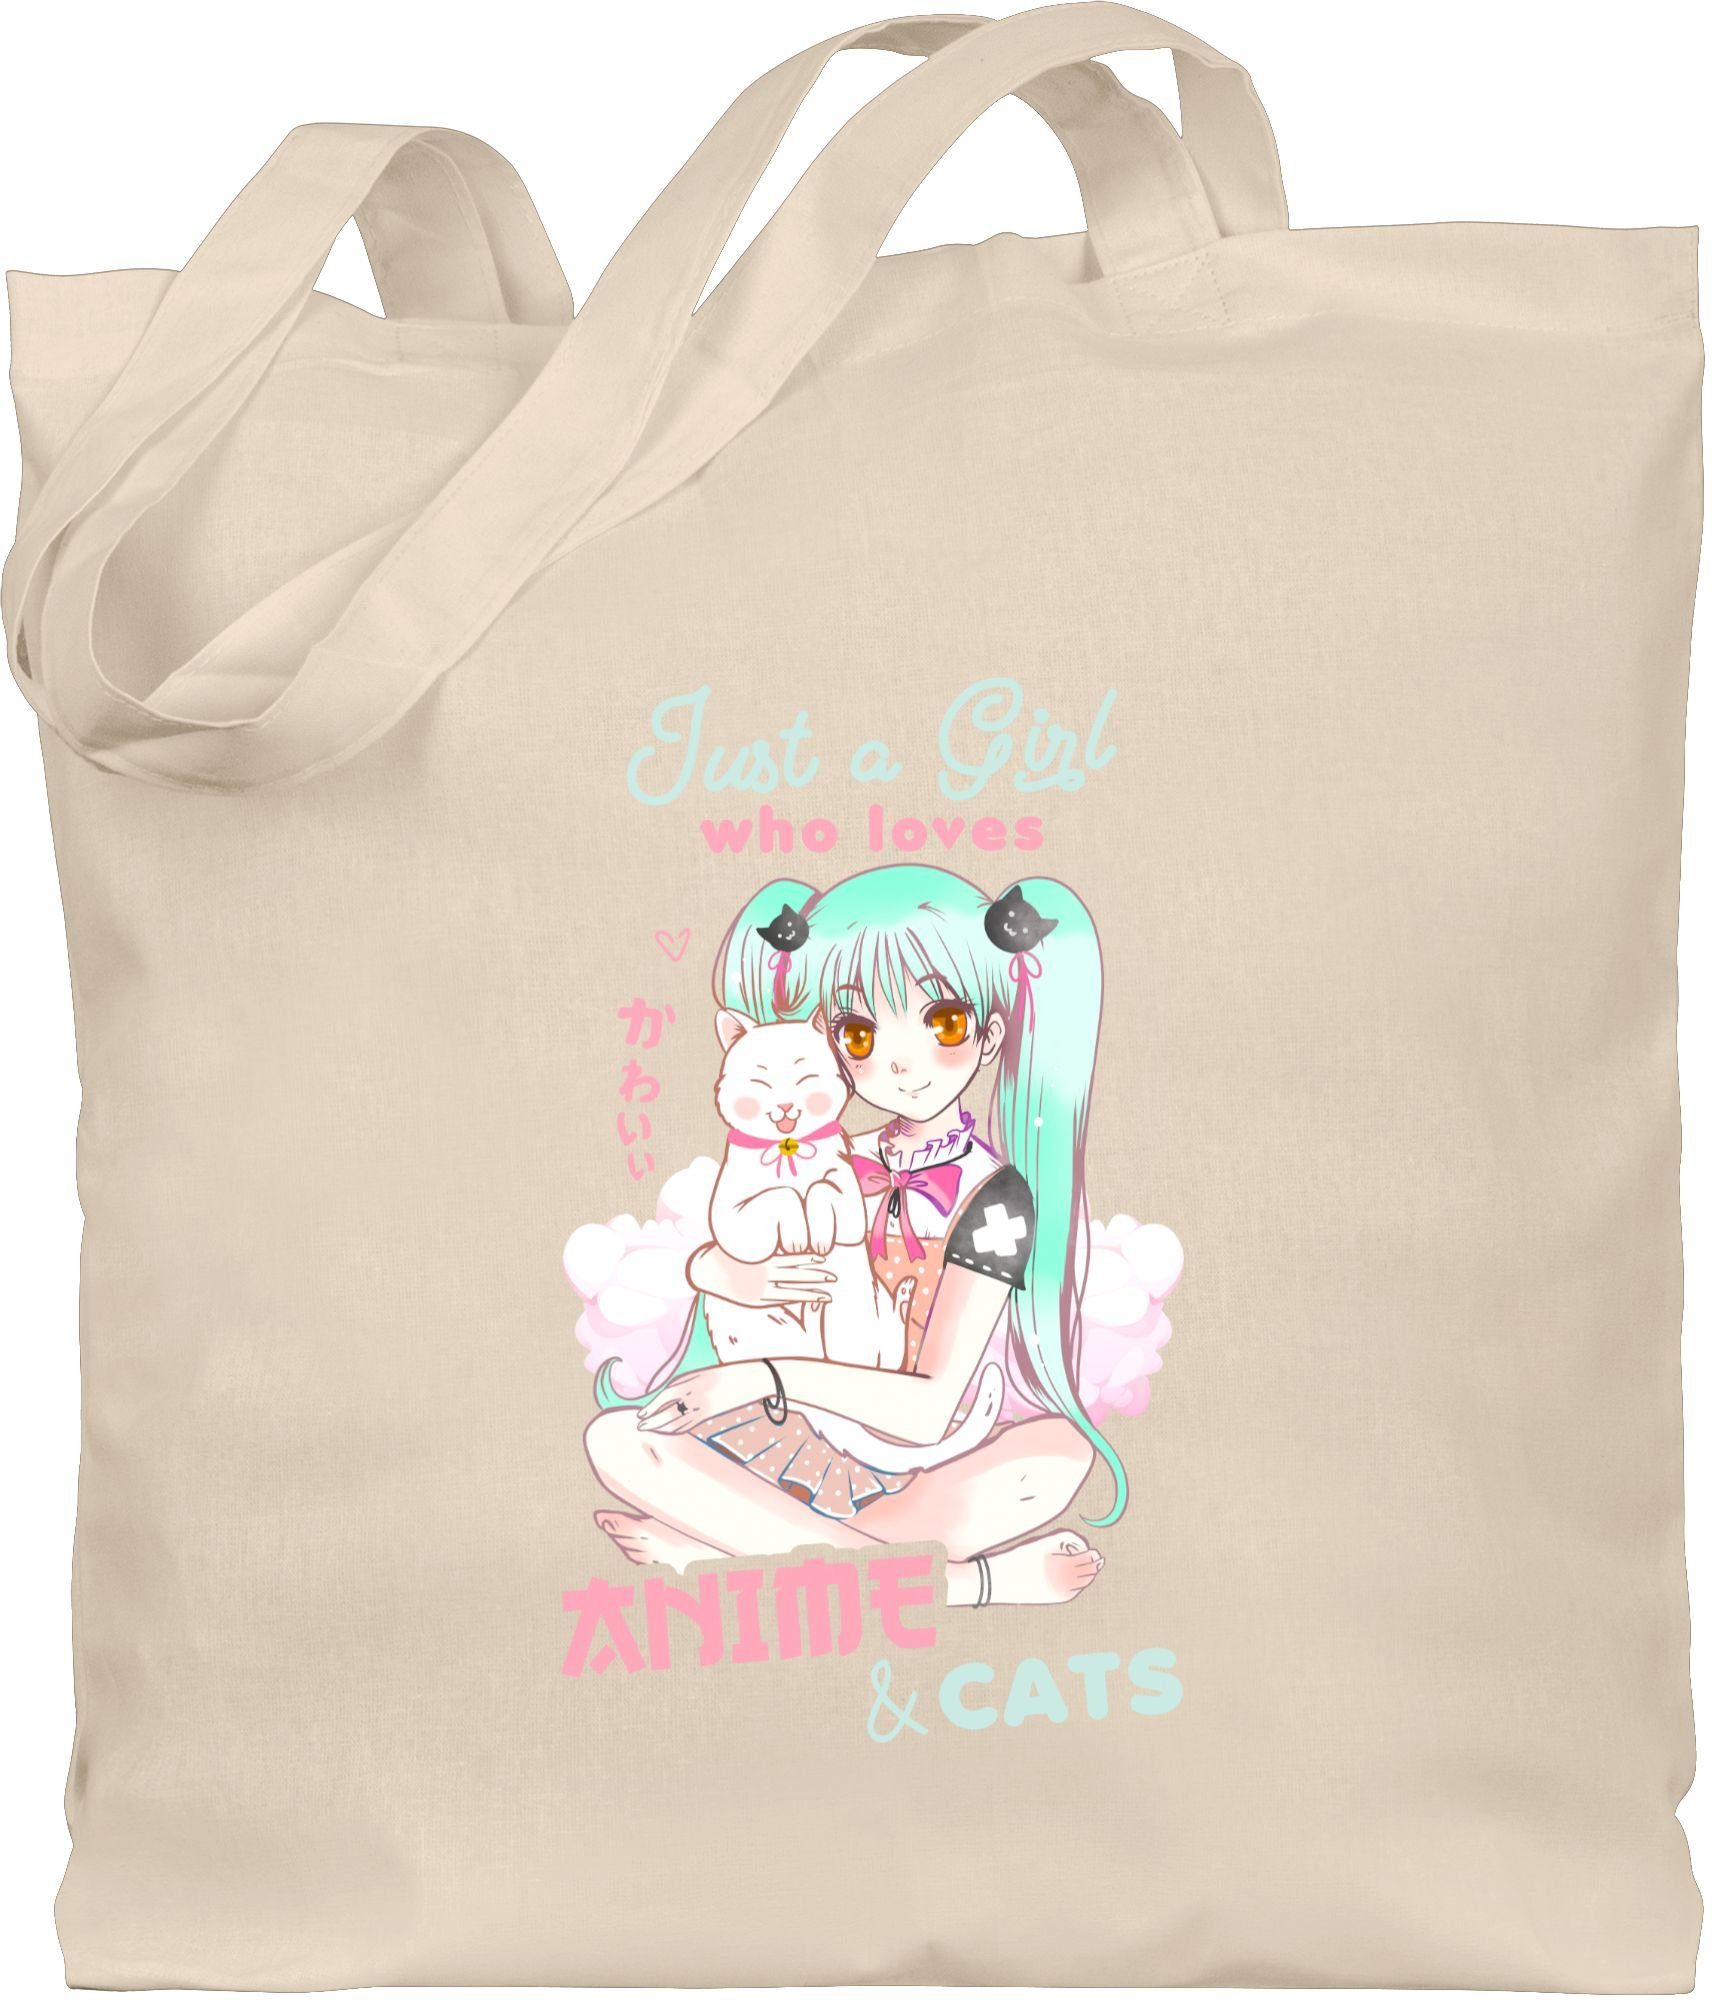 Naturweiß Just cats, 2 Anime Geschenke loves girl a Umhängetasche & anime Shirtracer who